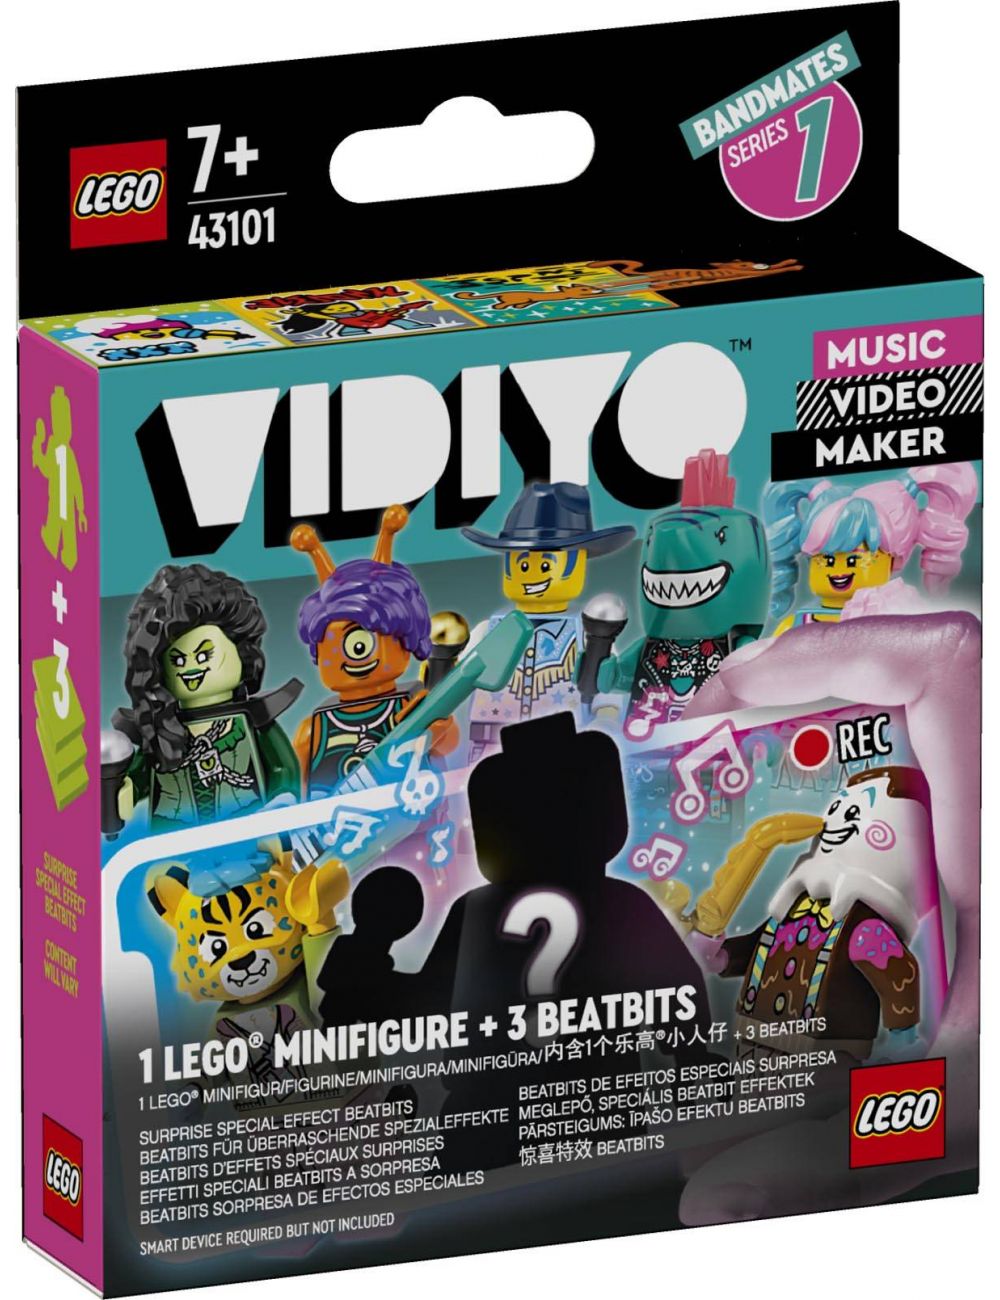 LEGO Vidiyo Bandmates Figurka i Zestaw BeatBitów 43101